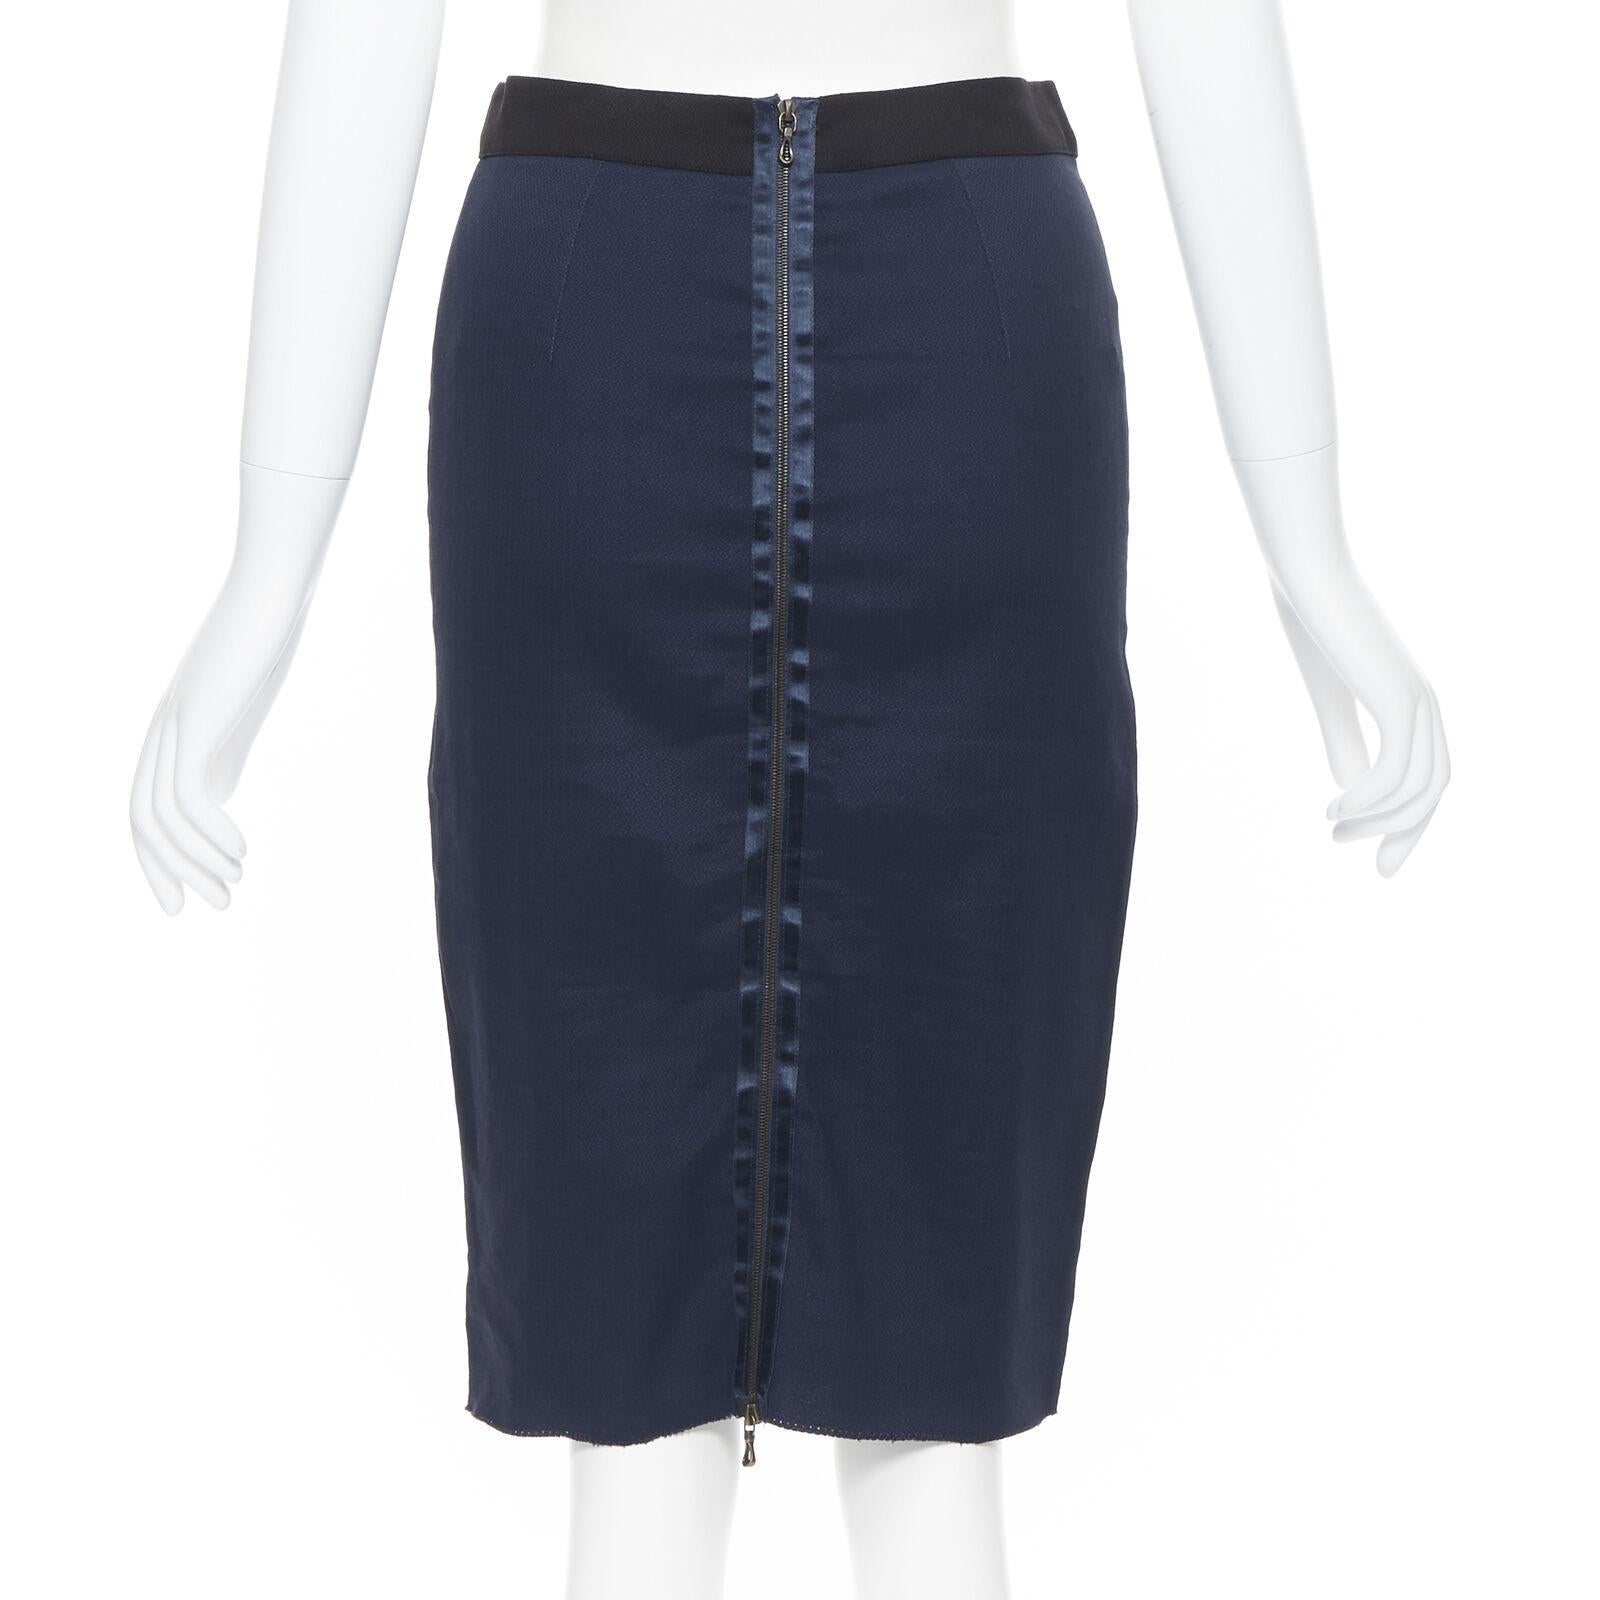 LANVIN ALBER ELBAZ 2014 navy blue linen blend exposed zip pencil skirt FR34 26